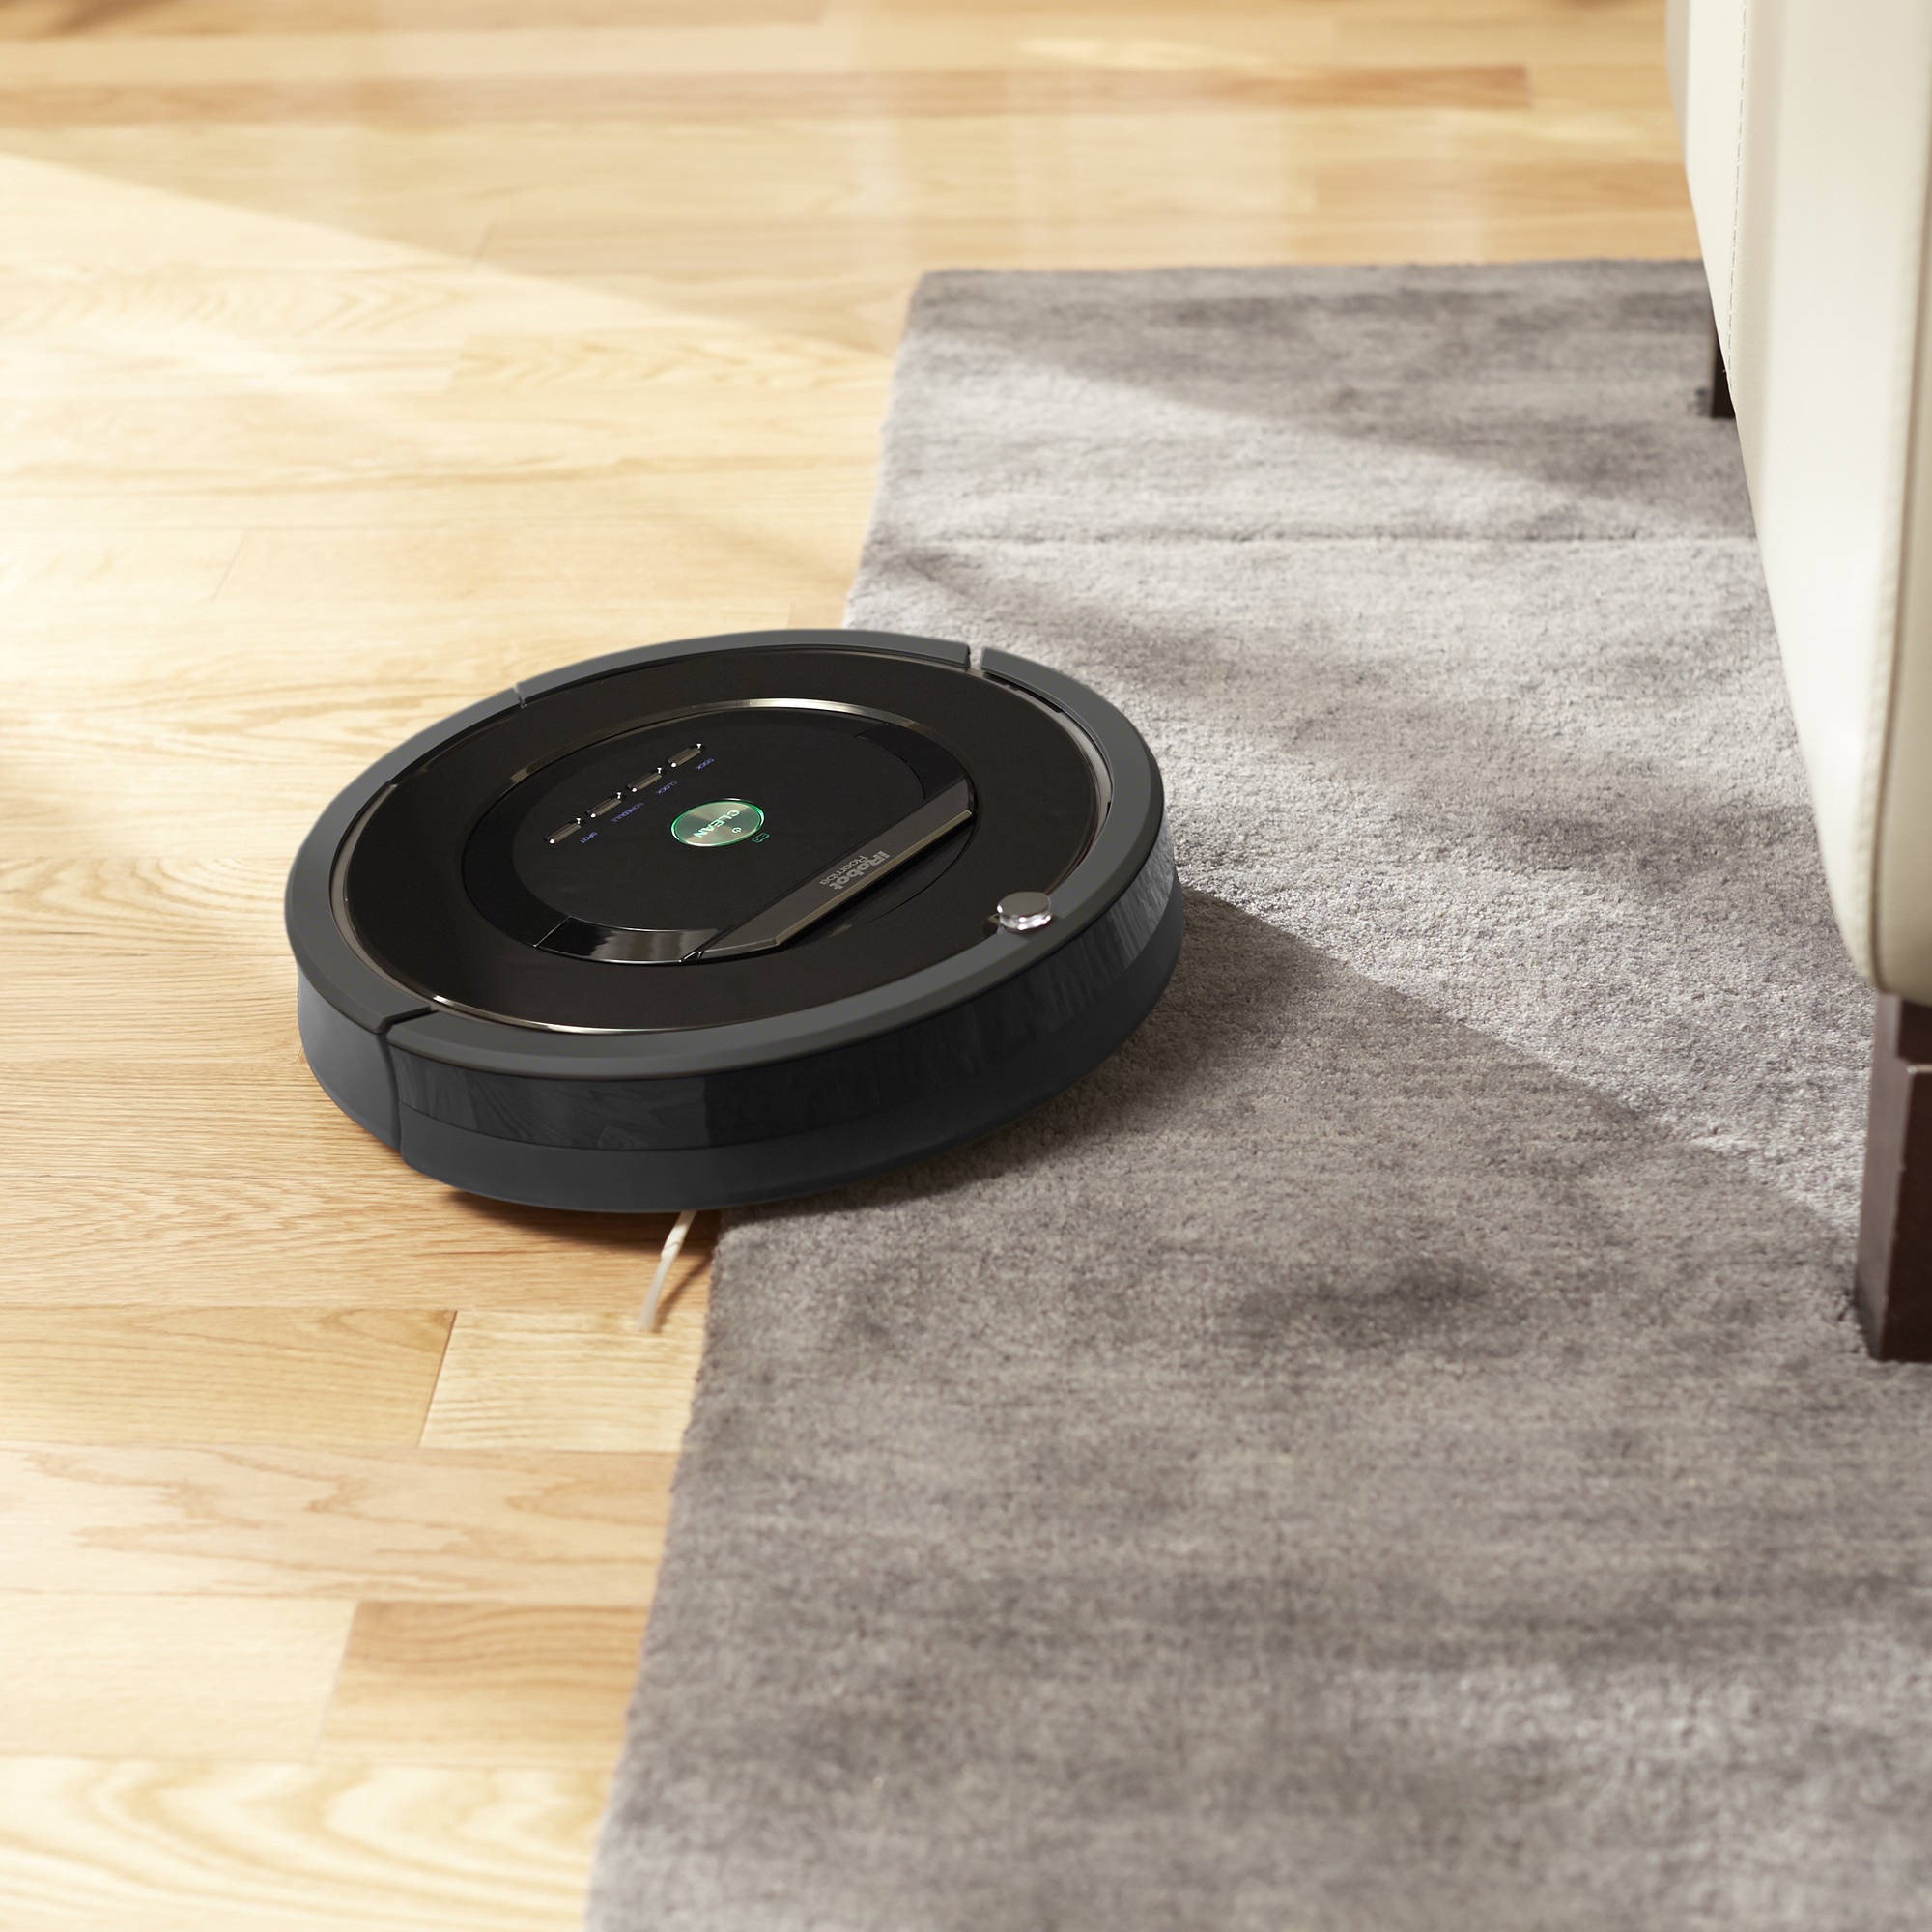 iRobot Roomba 880 Robot Vacuum with Manufacturer's Warranty - image 3 of 7